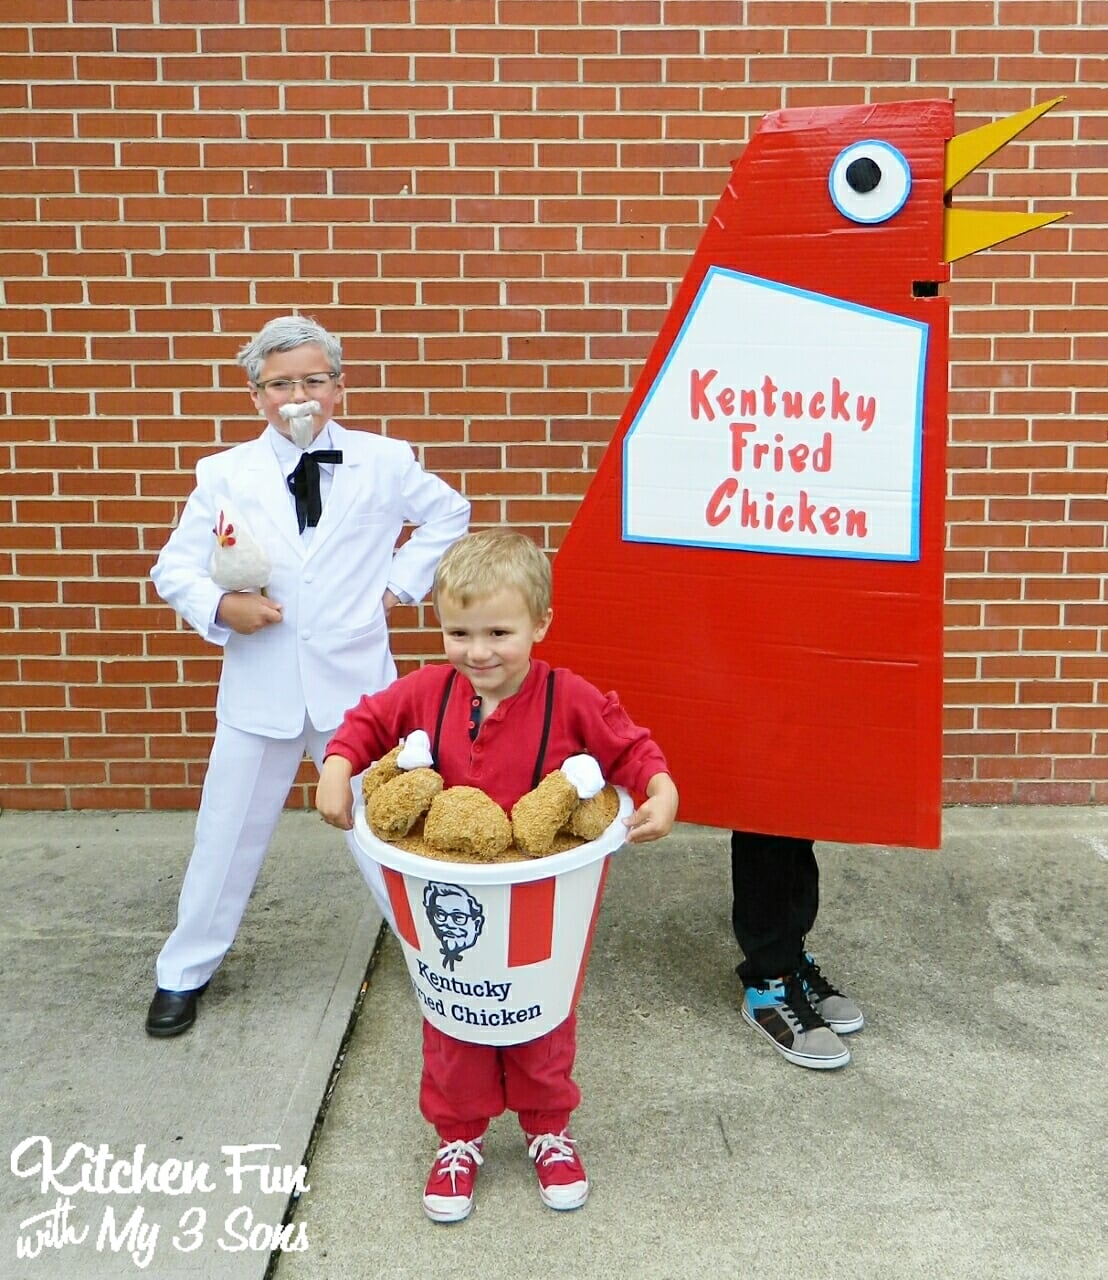 Our 2013 Homemade KFC Kentucky Fried Chicken Costumes!